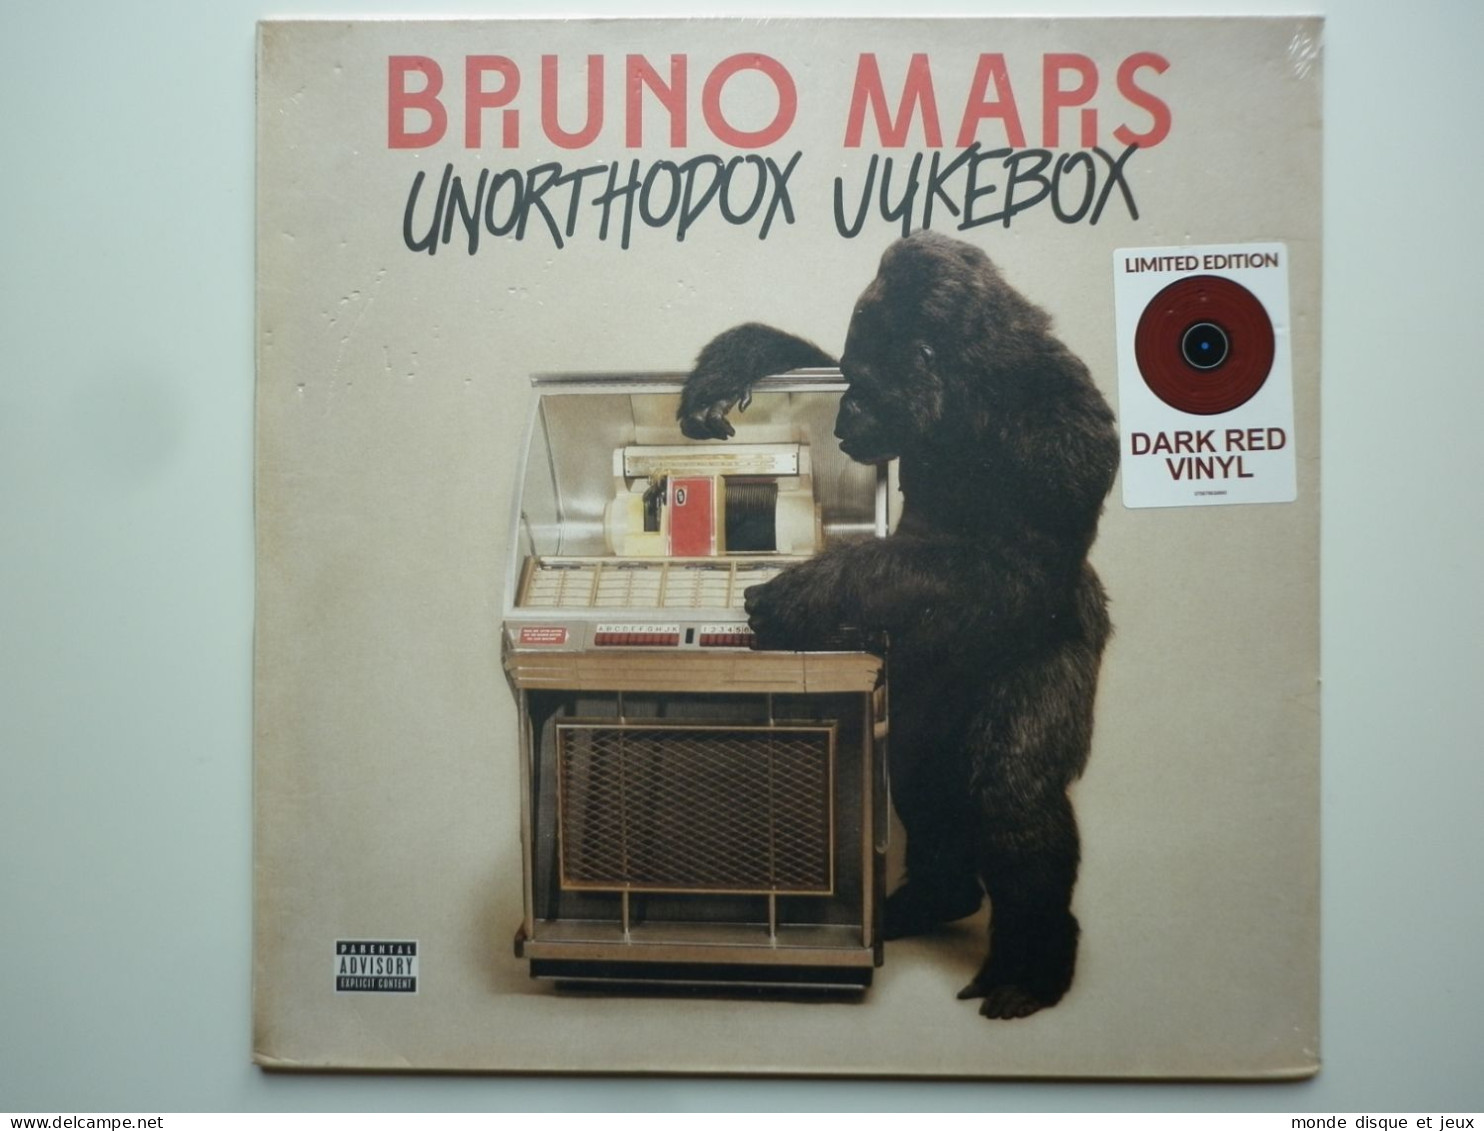 Bruno Mars Album 33Tours Vinyle Unorthodox Jukebox Couleur Rouge / Red - Autres - Musique Française